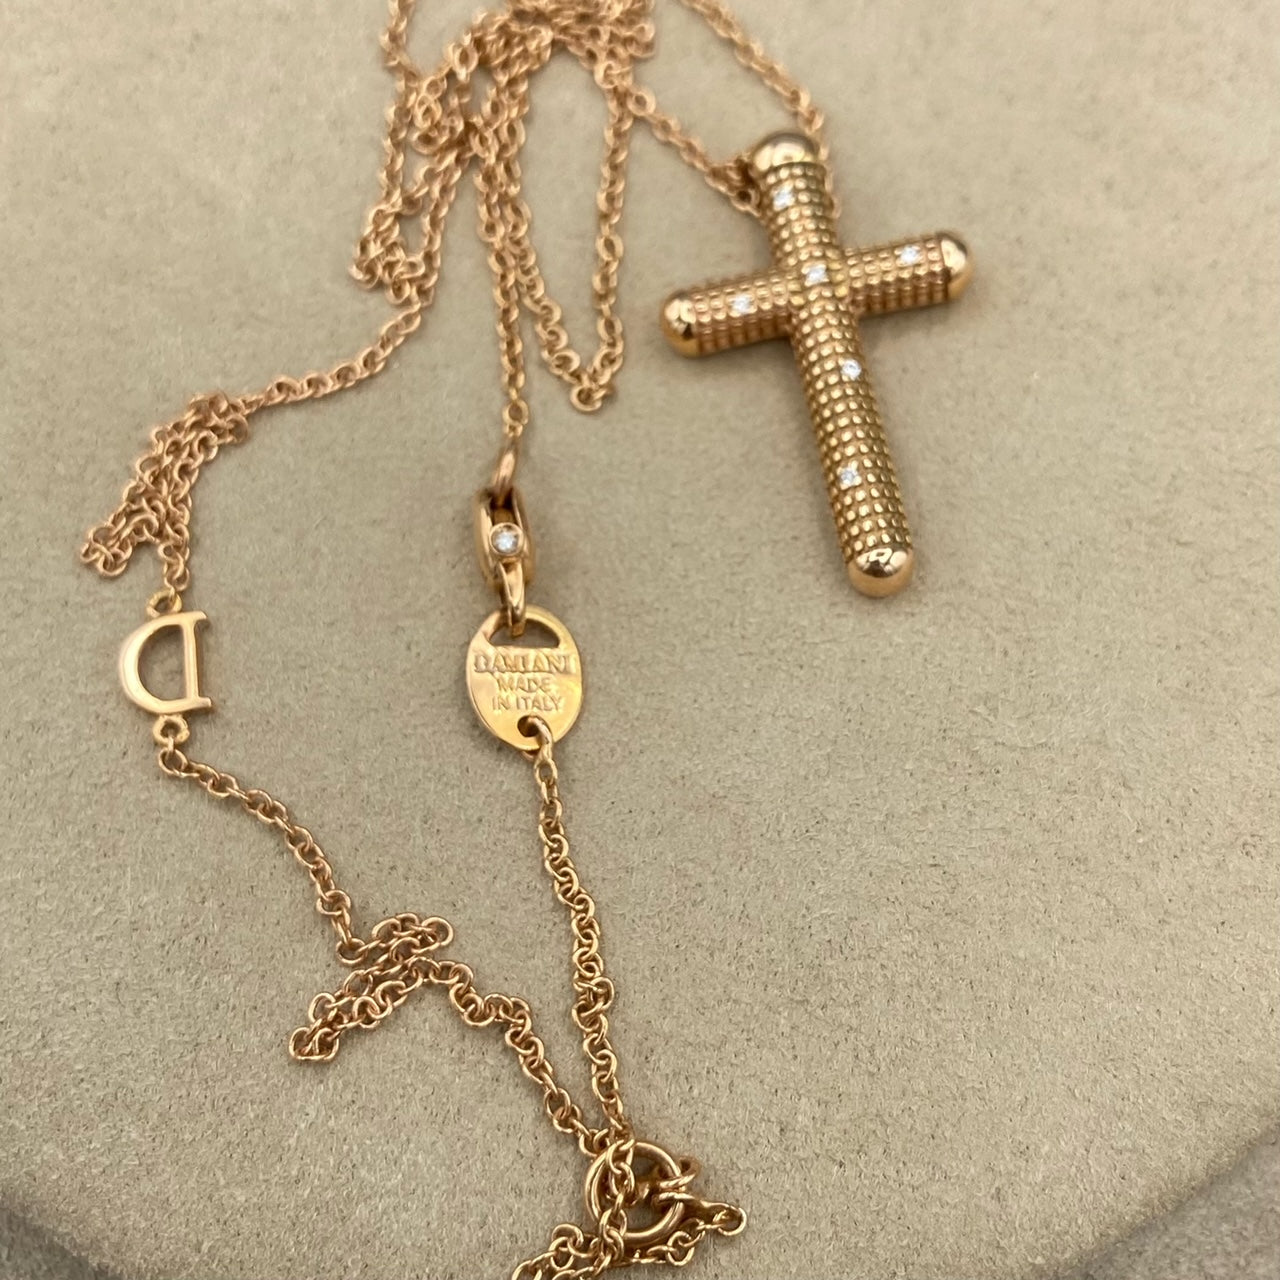 Damiani 18k Pink Gold and Diamond Cross Necklace "Metropolitan"